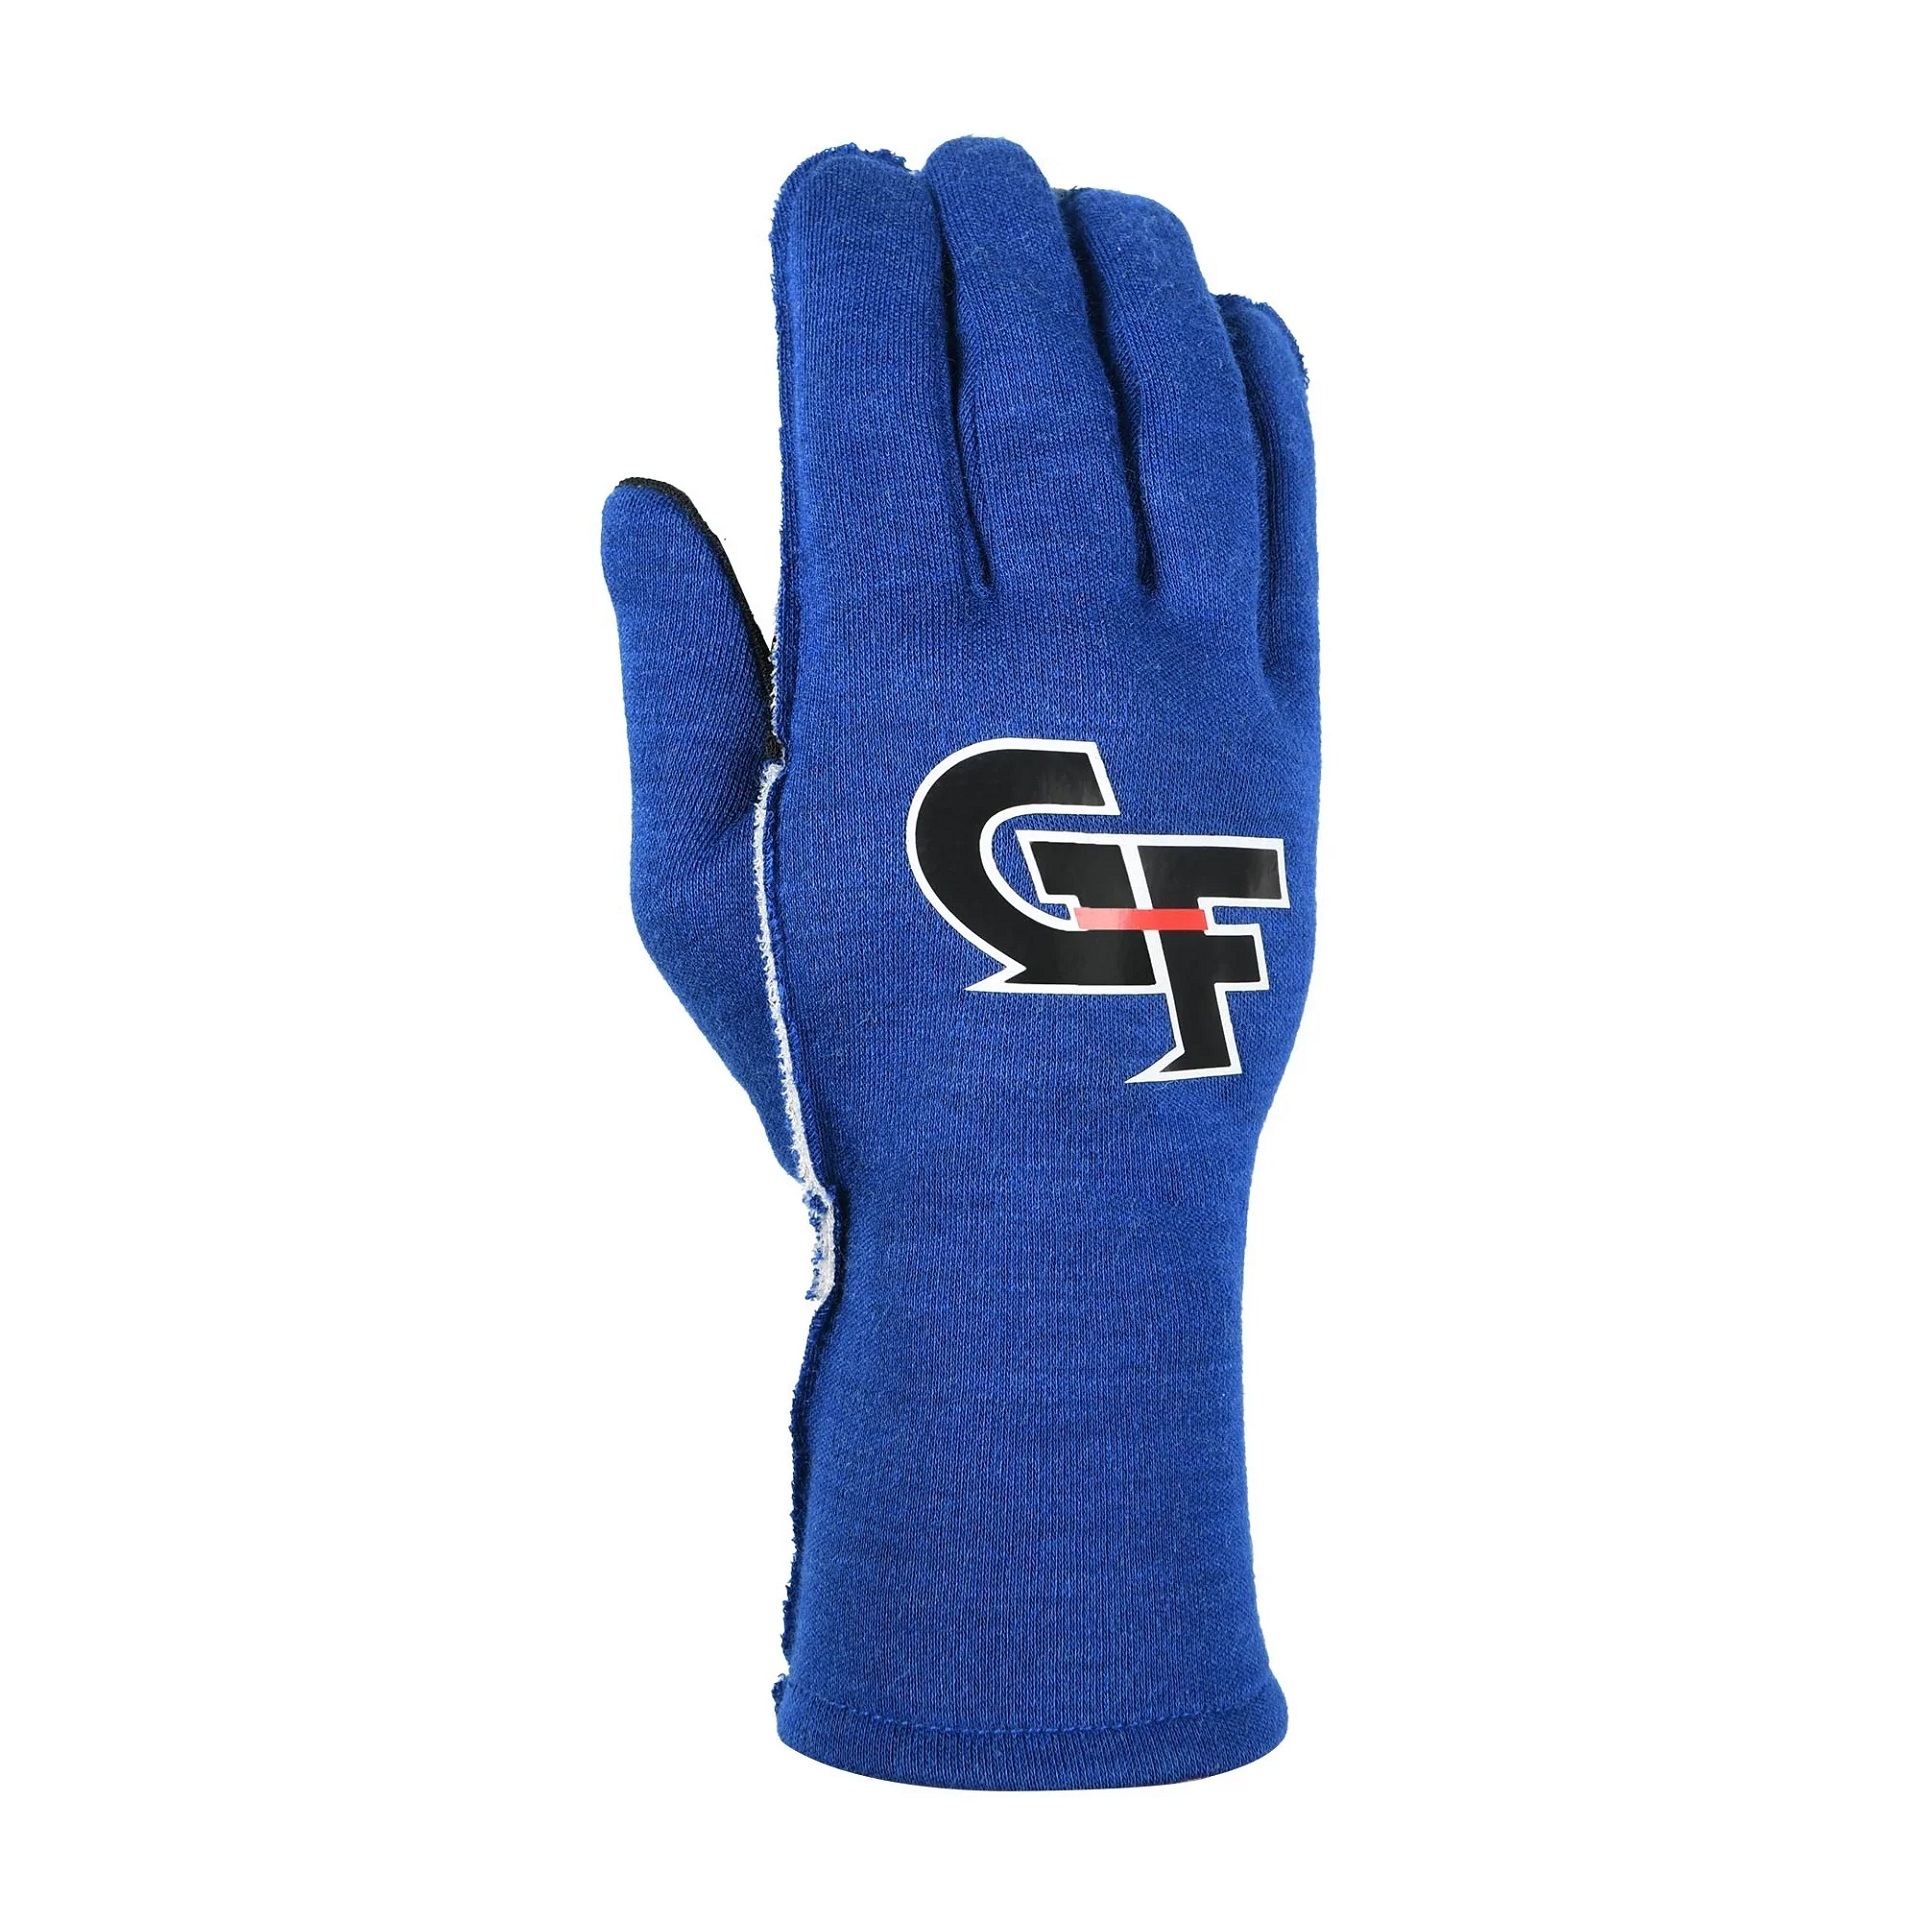 Gloves G-Limit Small Blue - 54000SMLBU